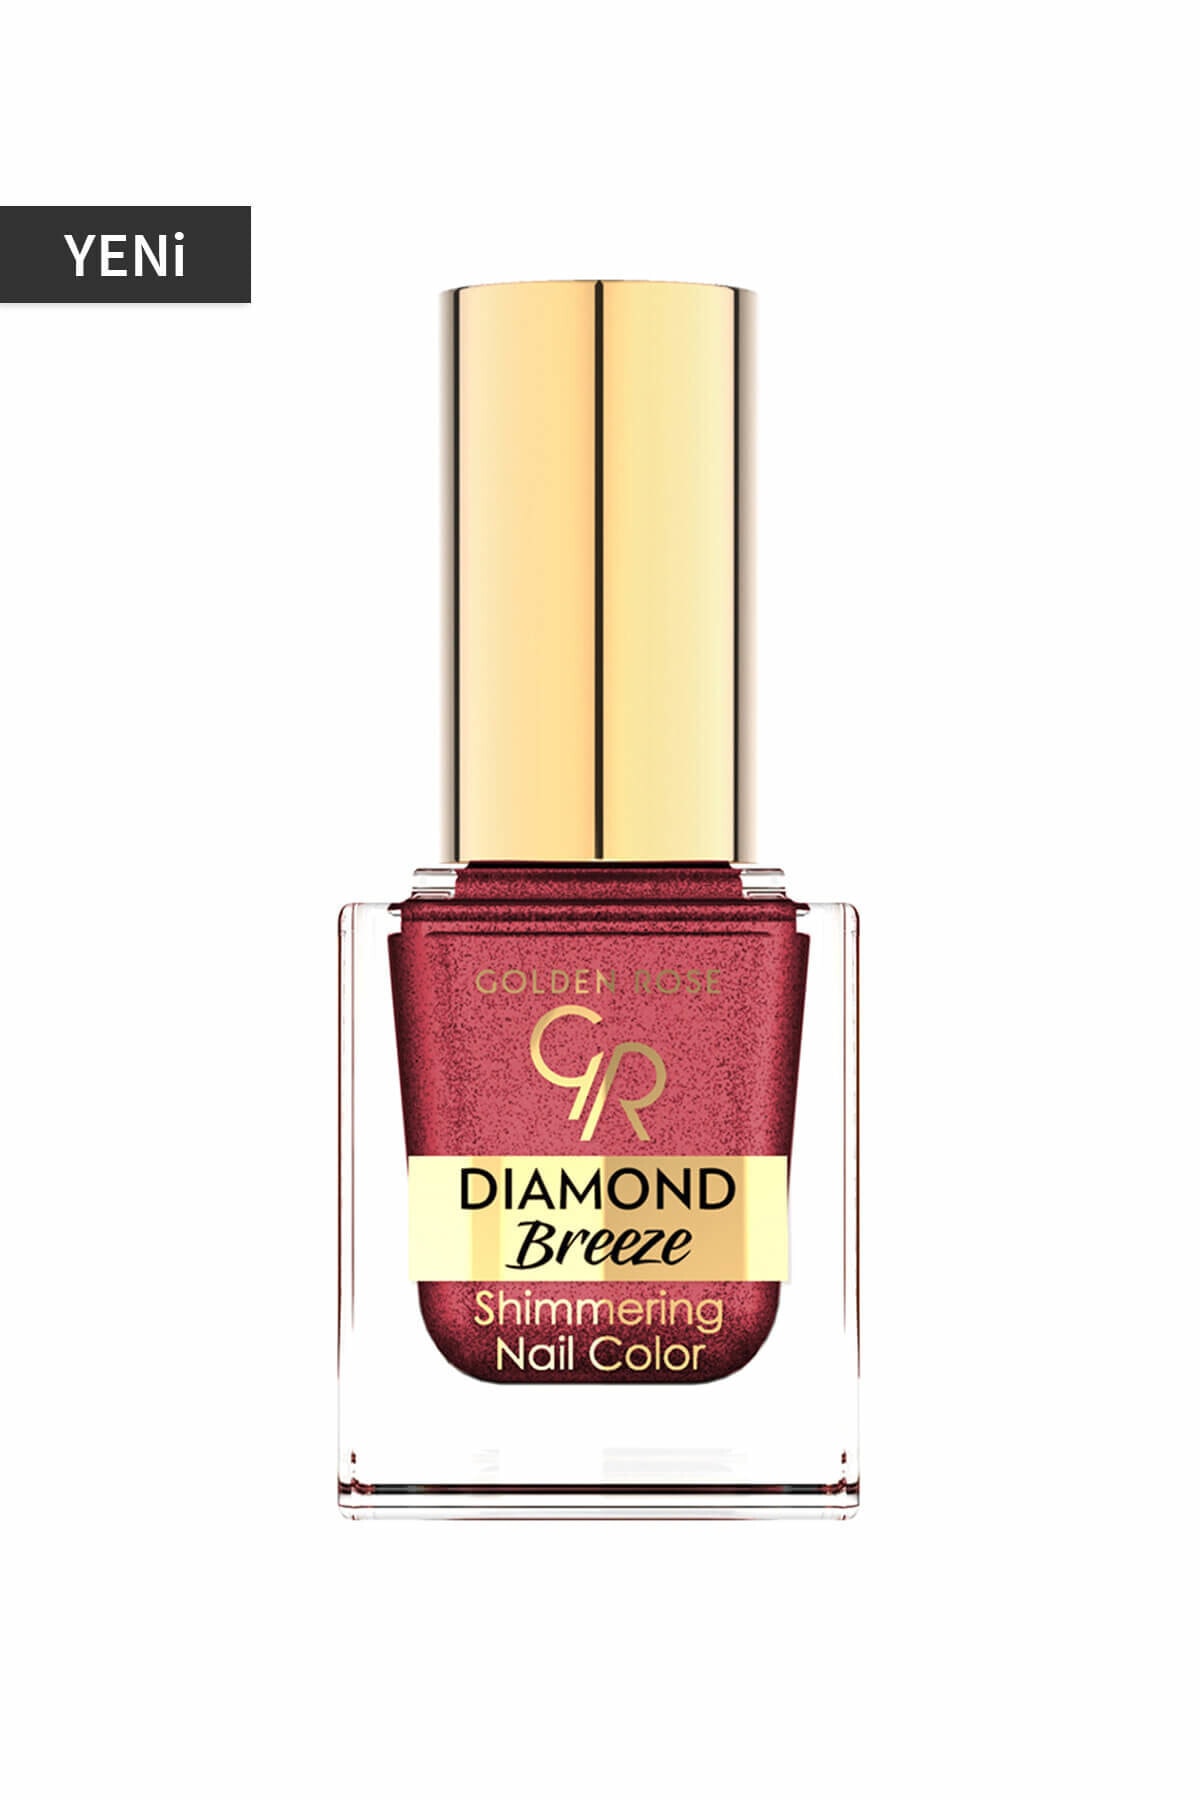 Golden Rose Oje - Diamond Breeze Shimmering Nail Color 04 Plum Sparkle 8691190965716